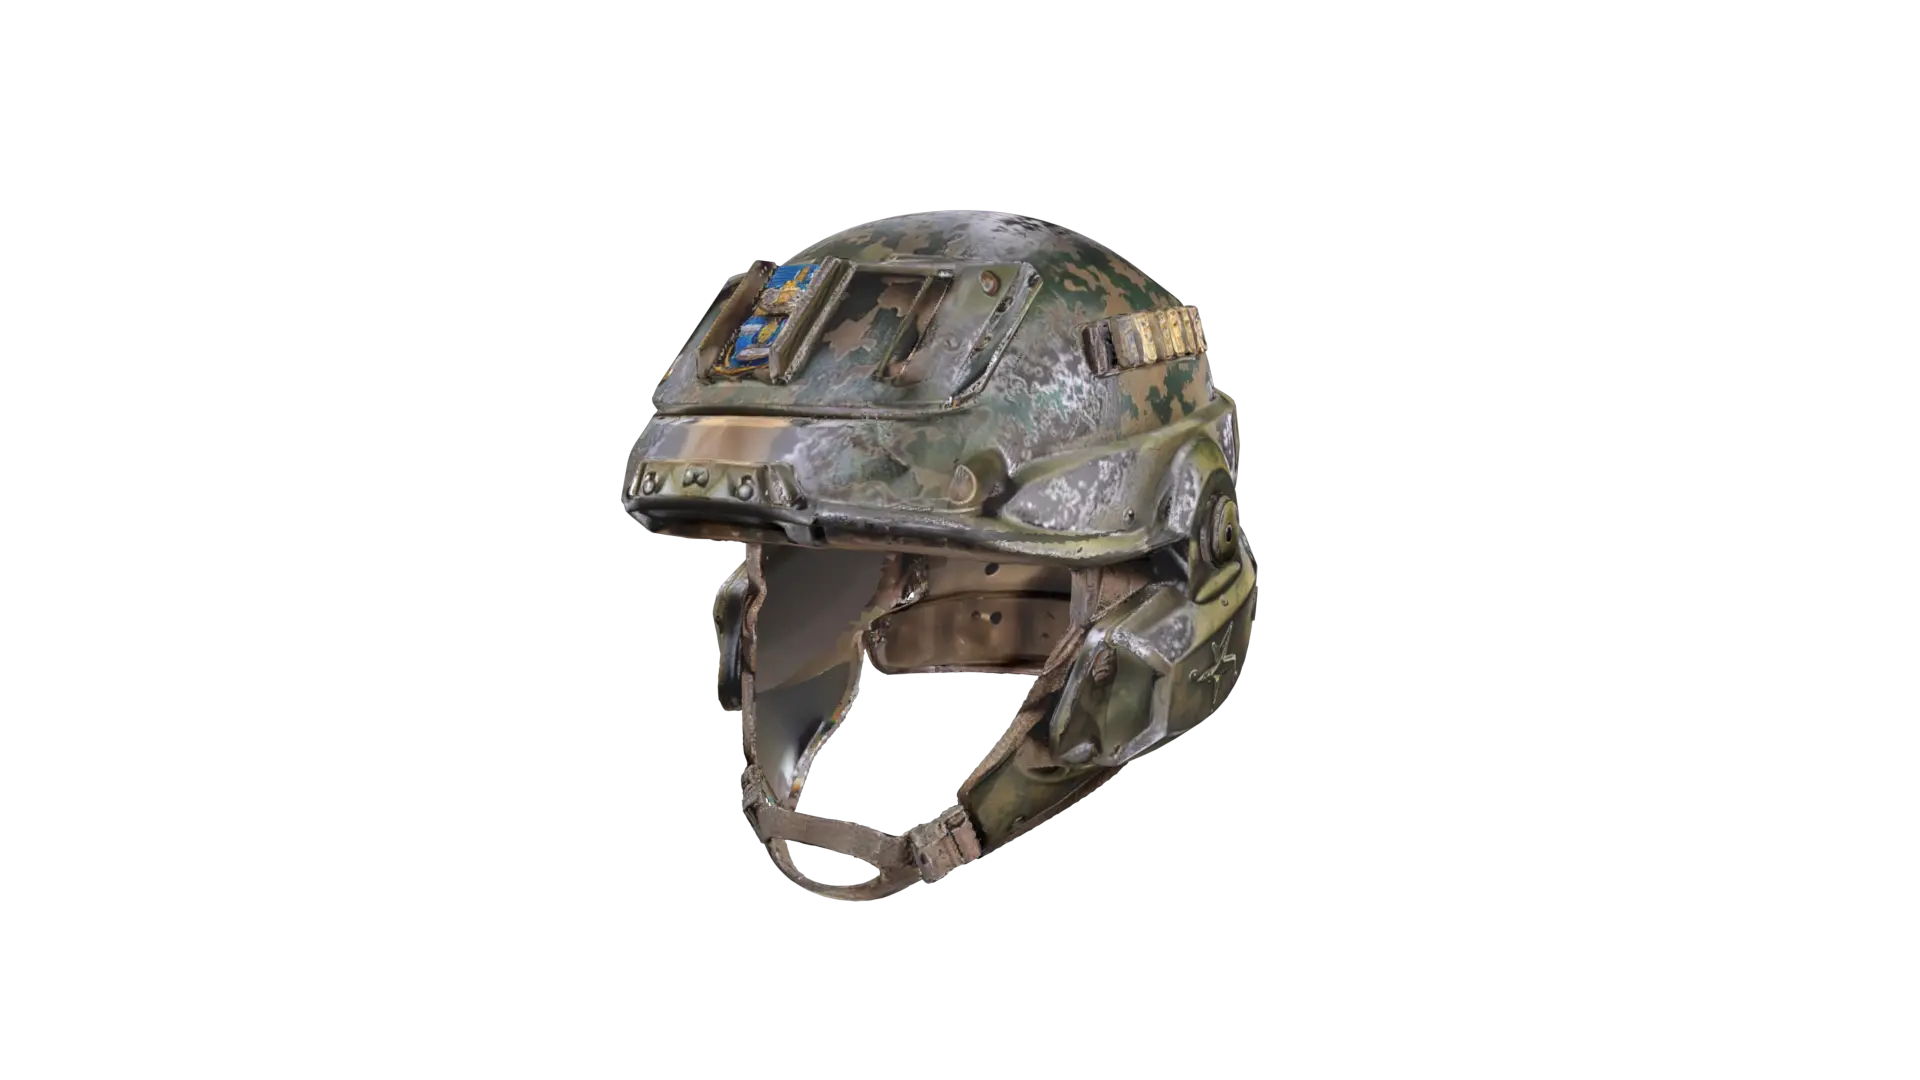 Marine Corps Helmet, realistc, more details, best quality, 4k